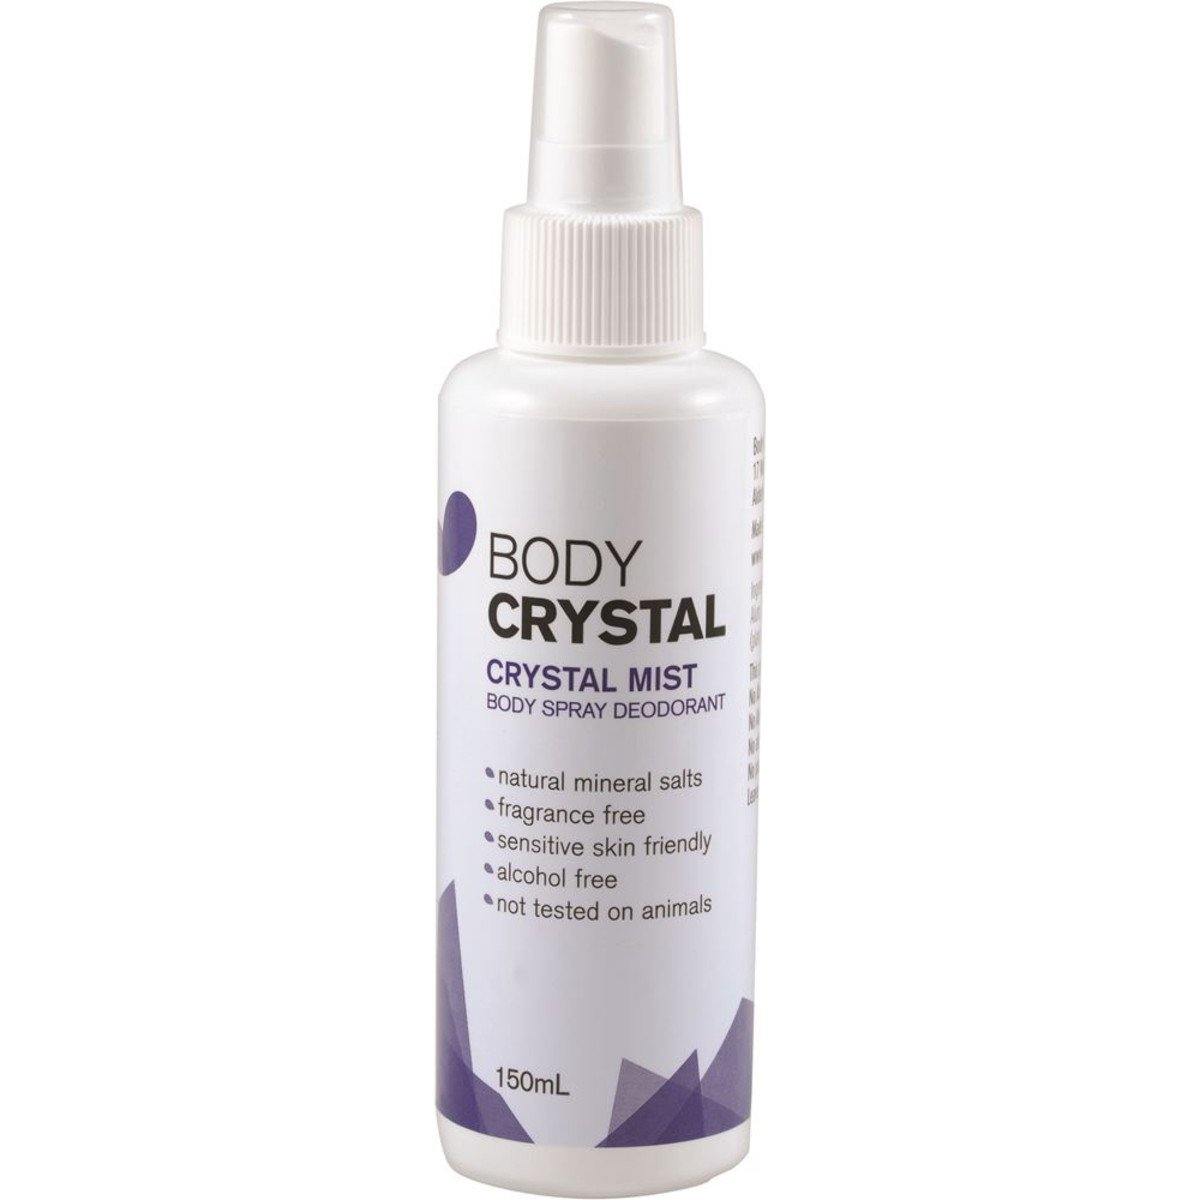 Body Crystal Body Spray Deodorant Cryst Mist Frag Free 150ml - QVM Vitamins™